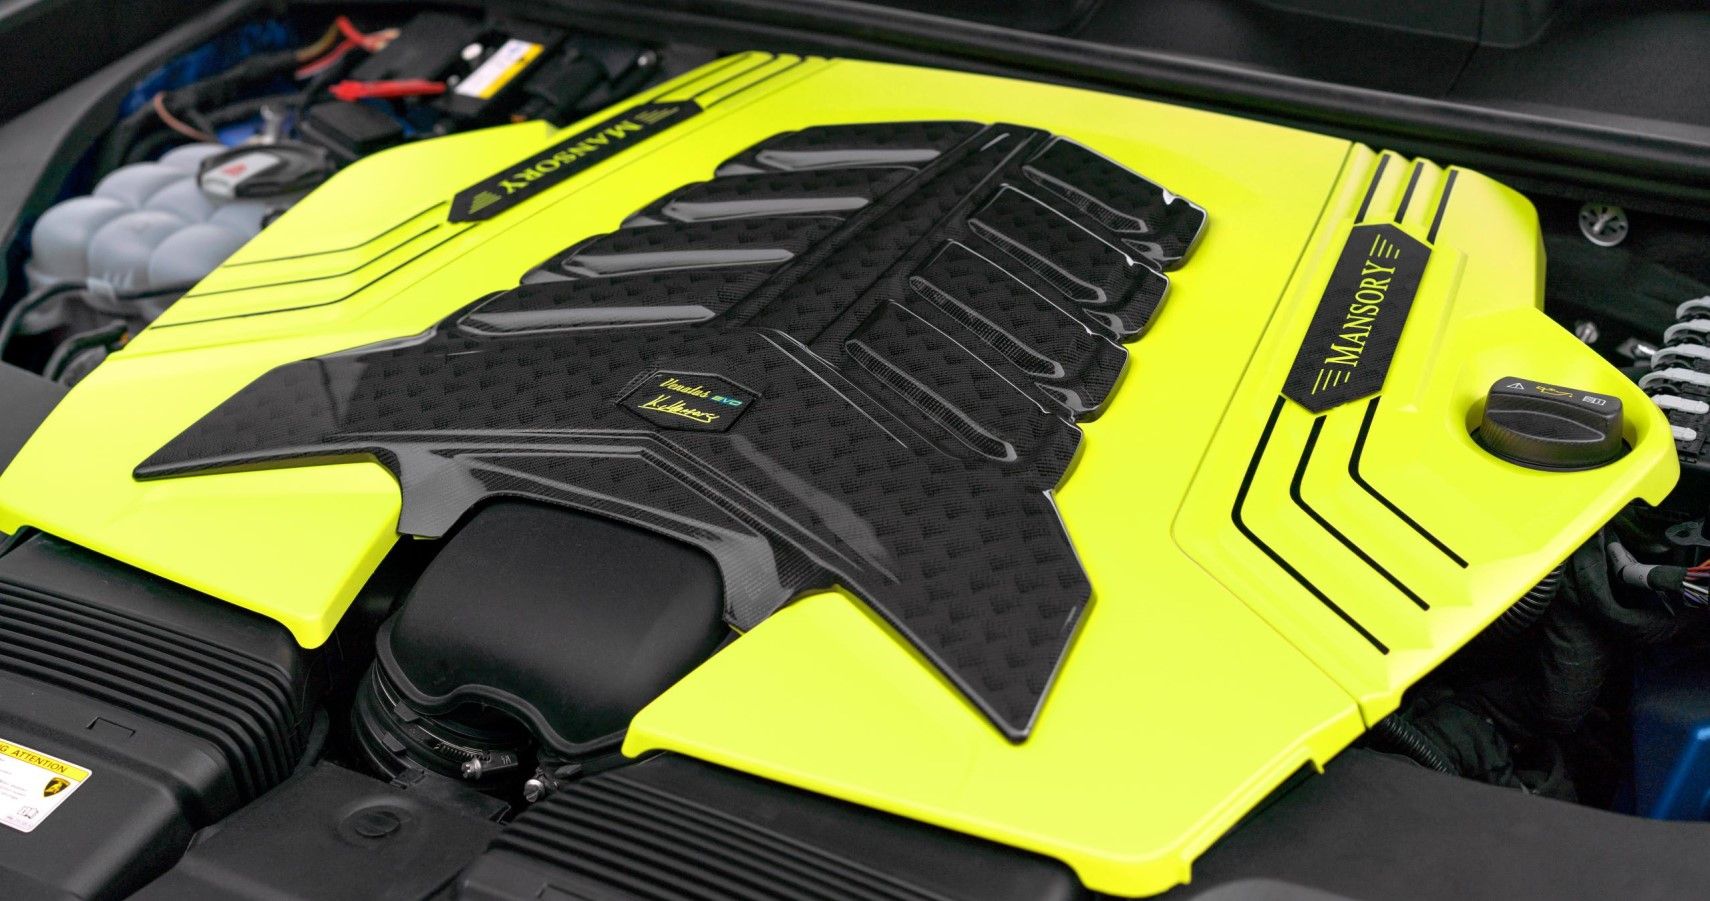 Mansory Venatus Lamborghini Urus has an engine cover that screams "Mansory"